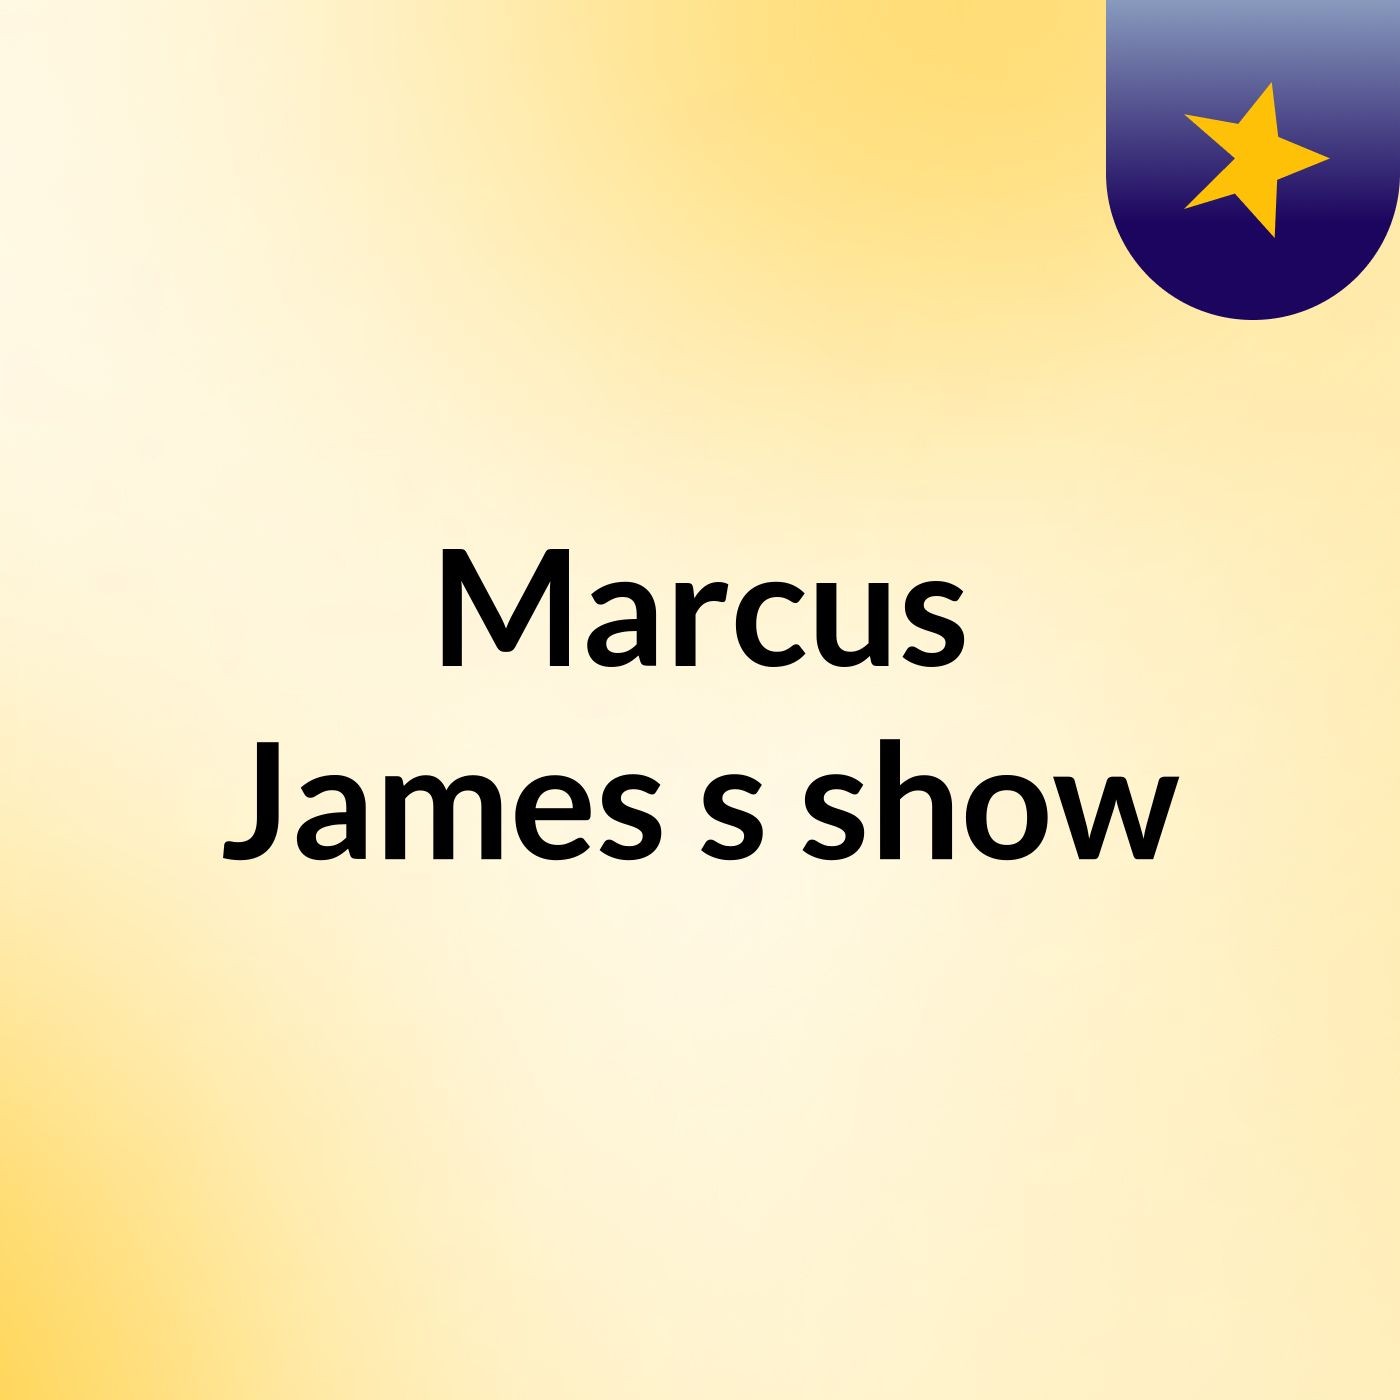 Episode 8 - Marcus James's show